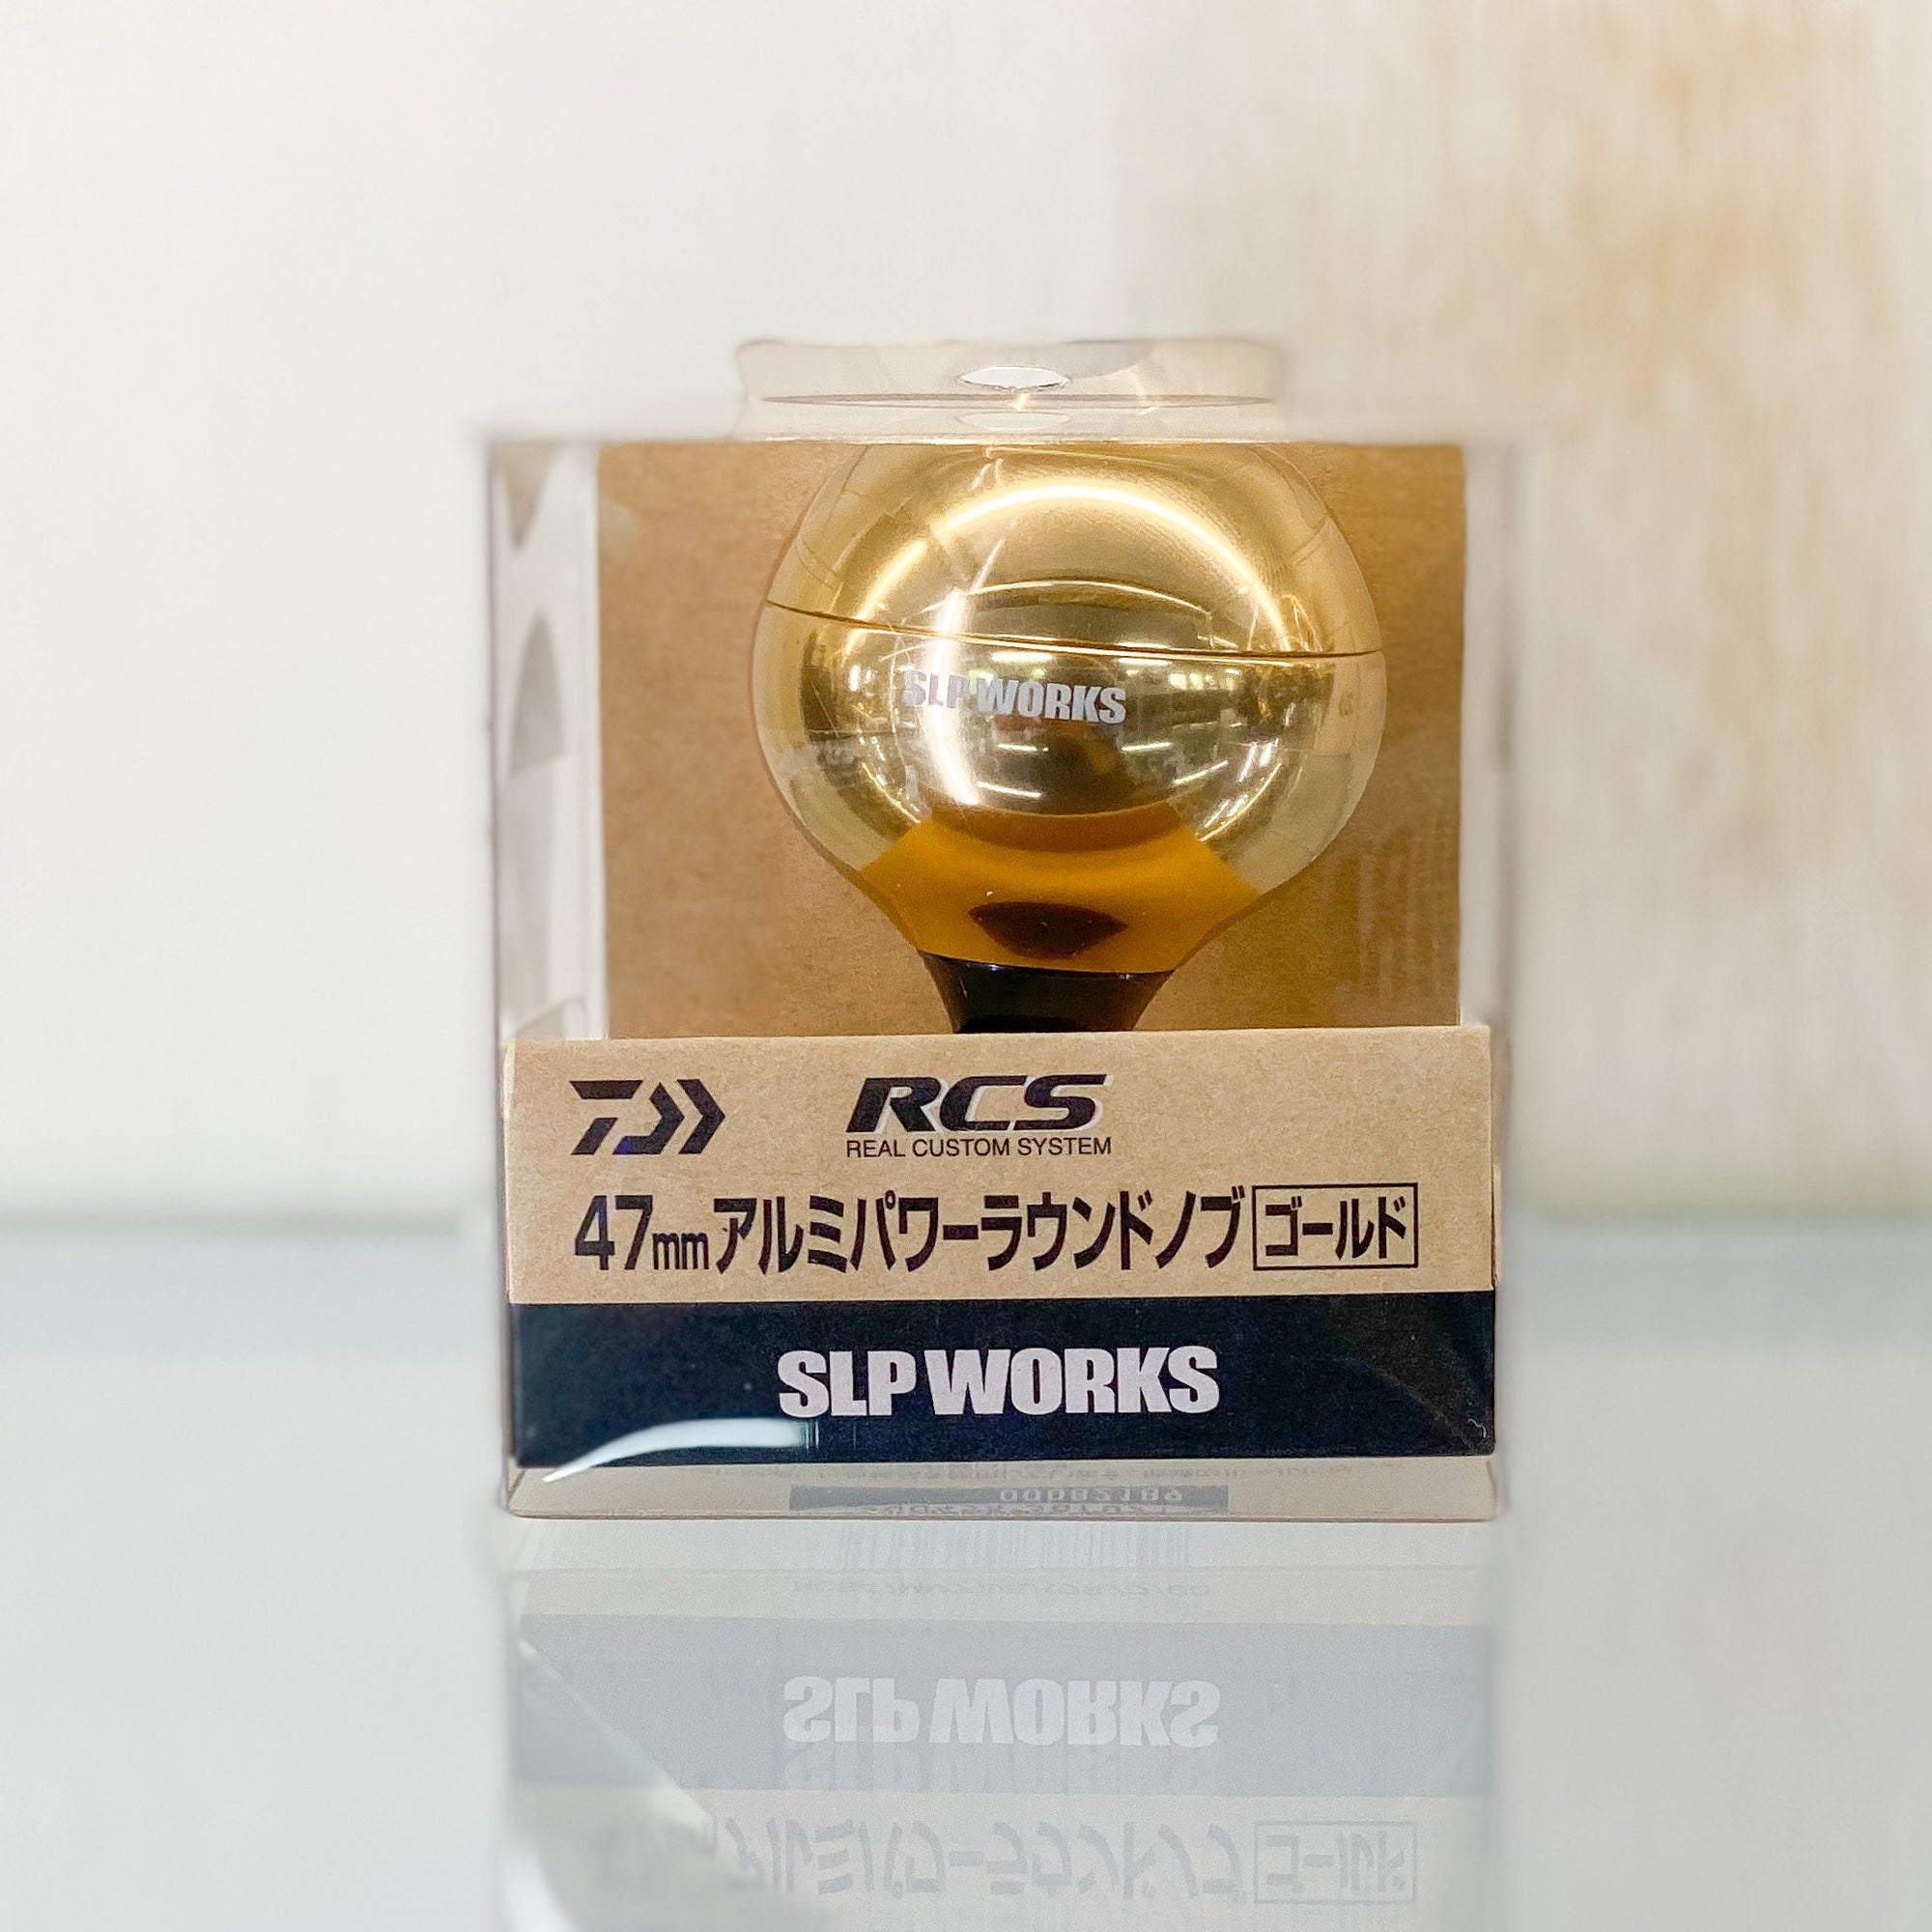 Daiwa RCS SLP Works 47mm Round Gold Power Knob